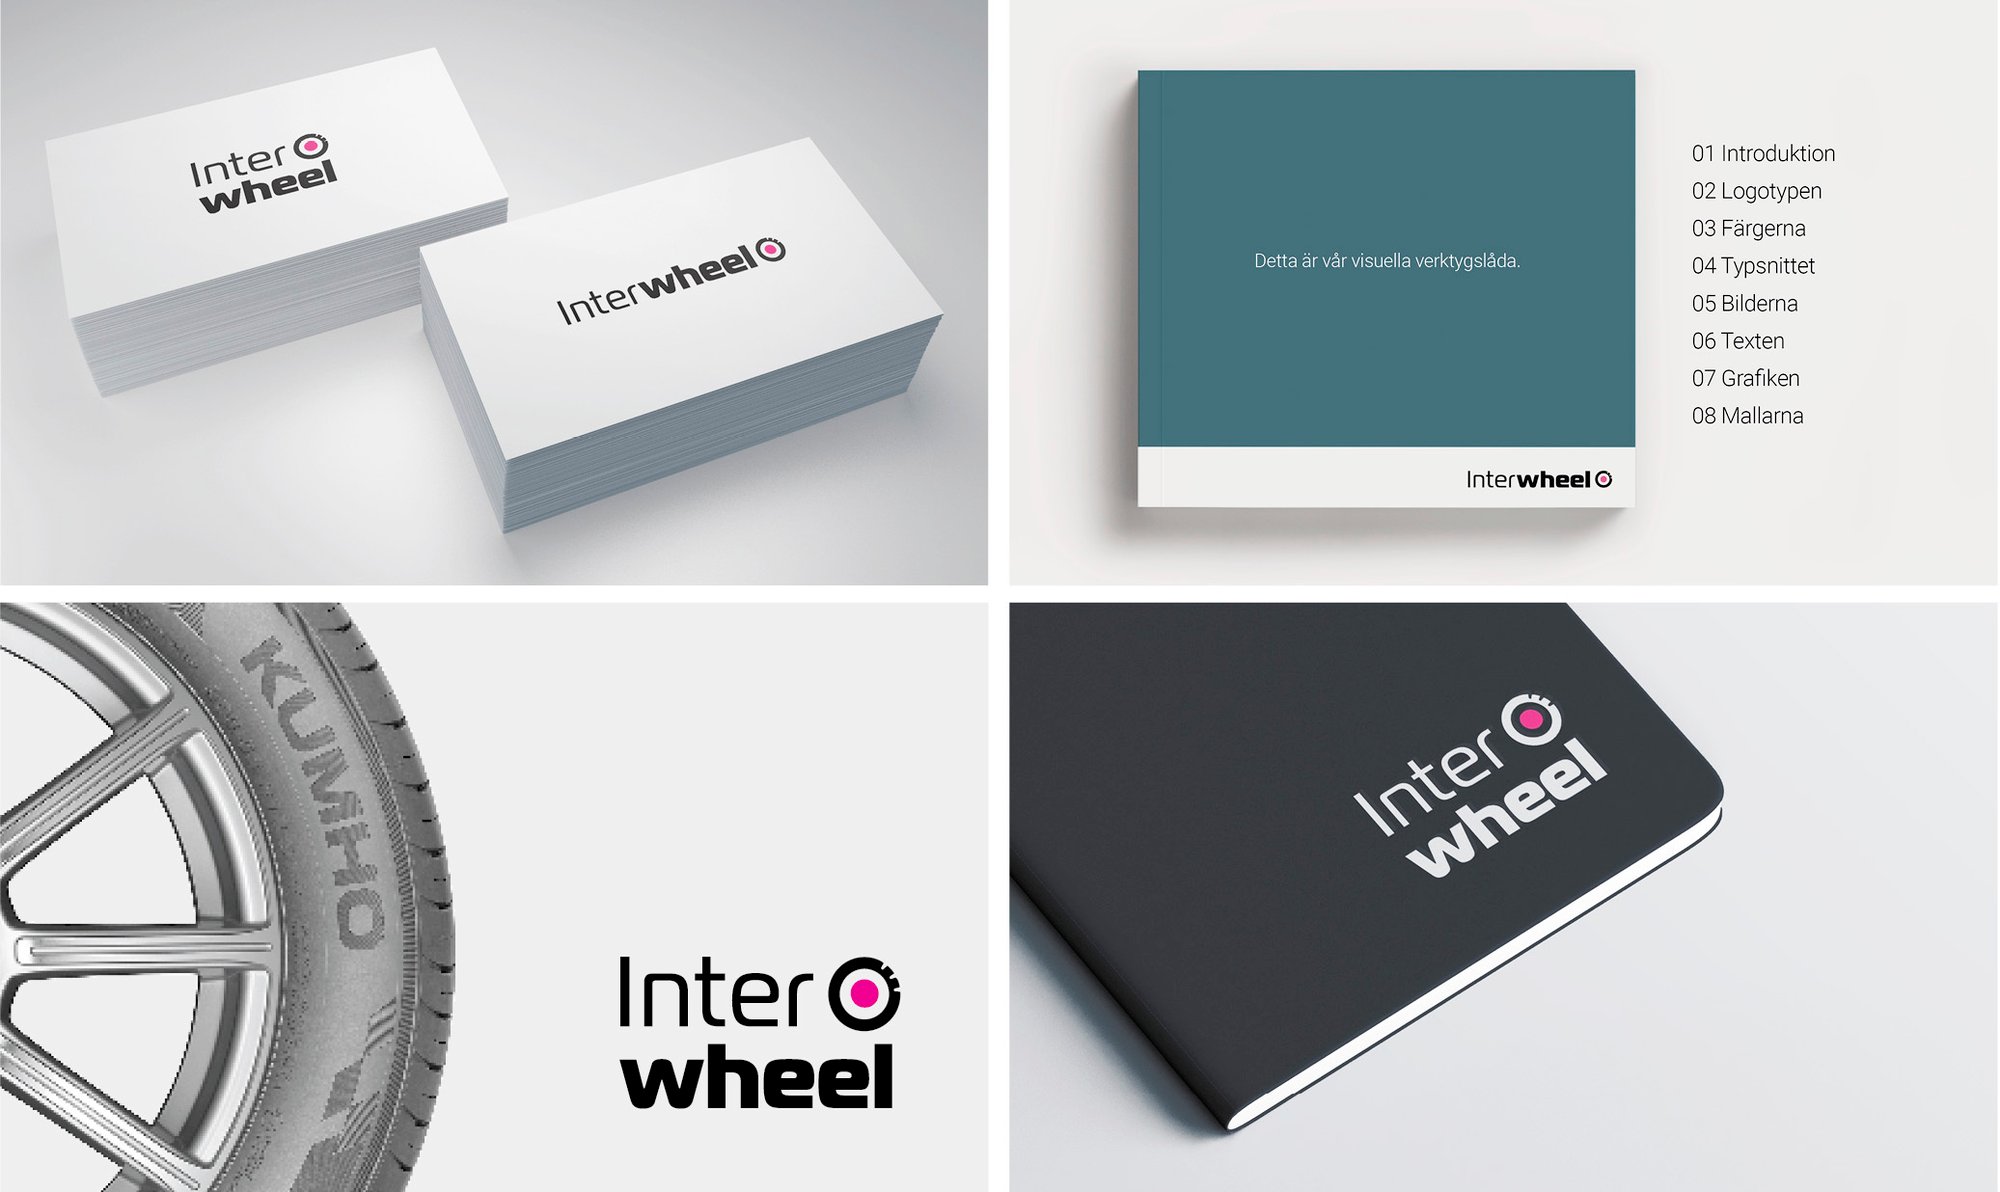 KW Wheels, Dawa Däck and Pro-imp is now Interwheel